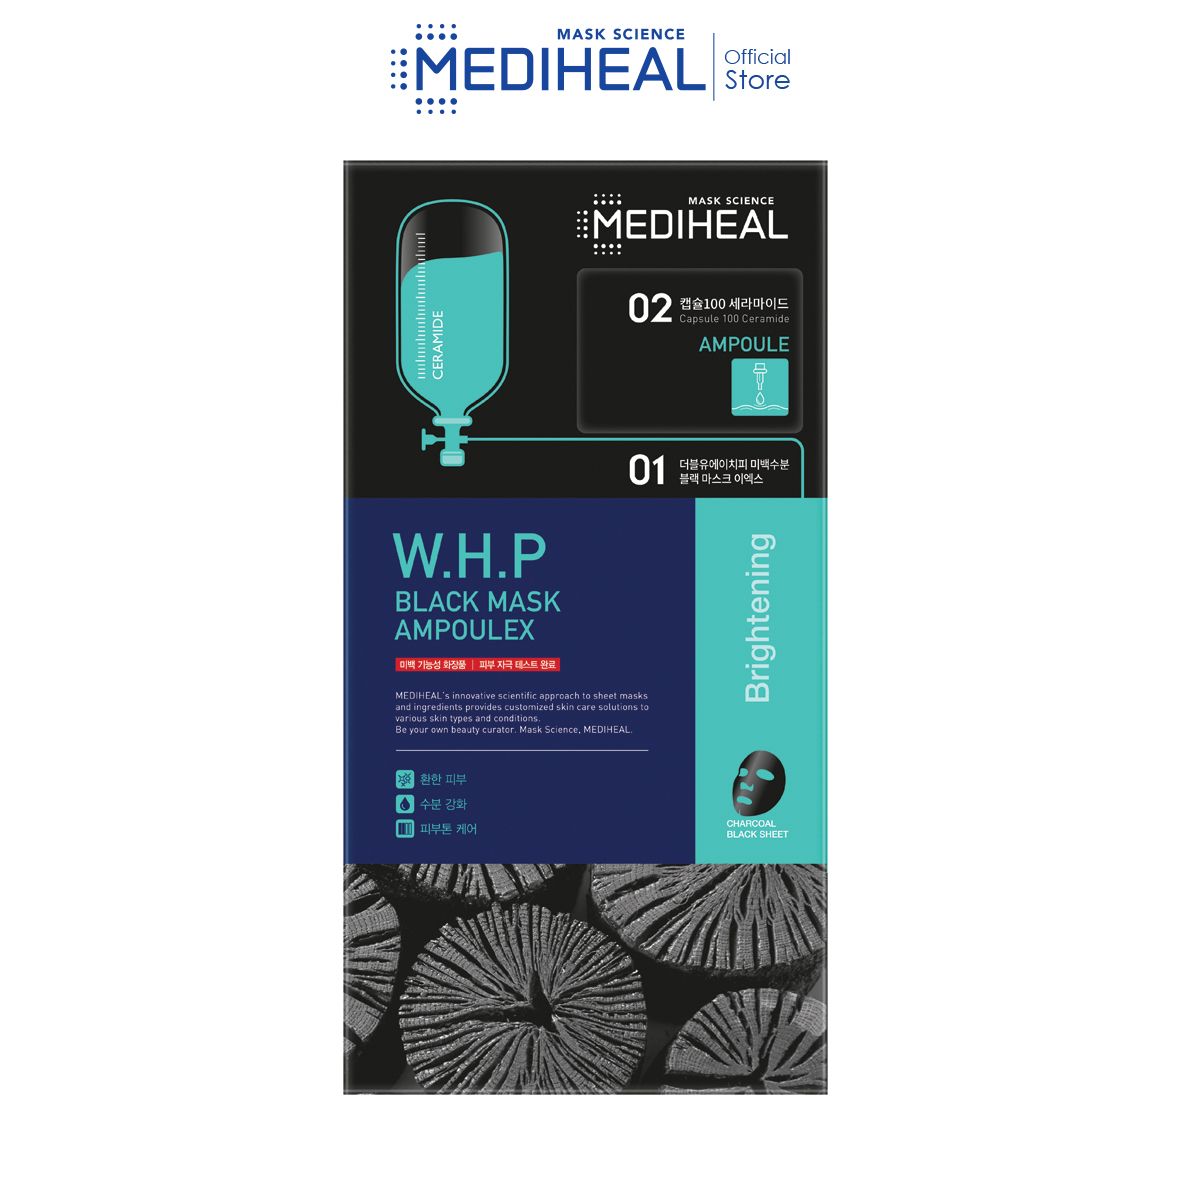 Mediheal W.H.P Black Mask Ampoulex (10's)